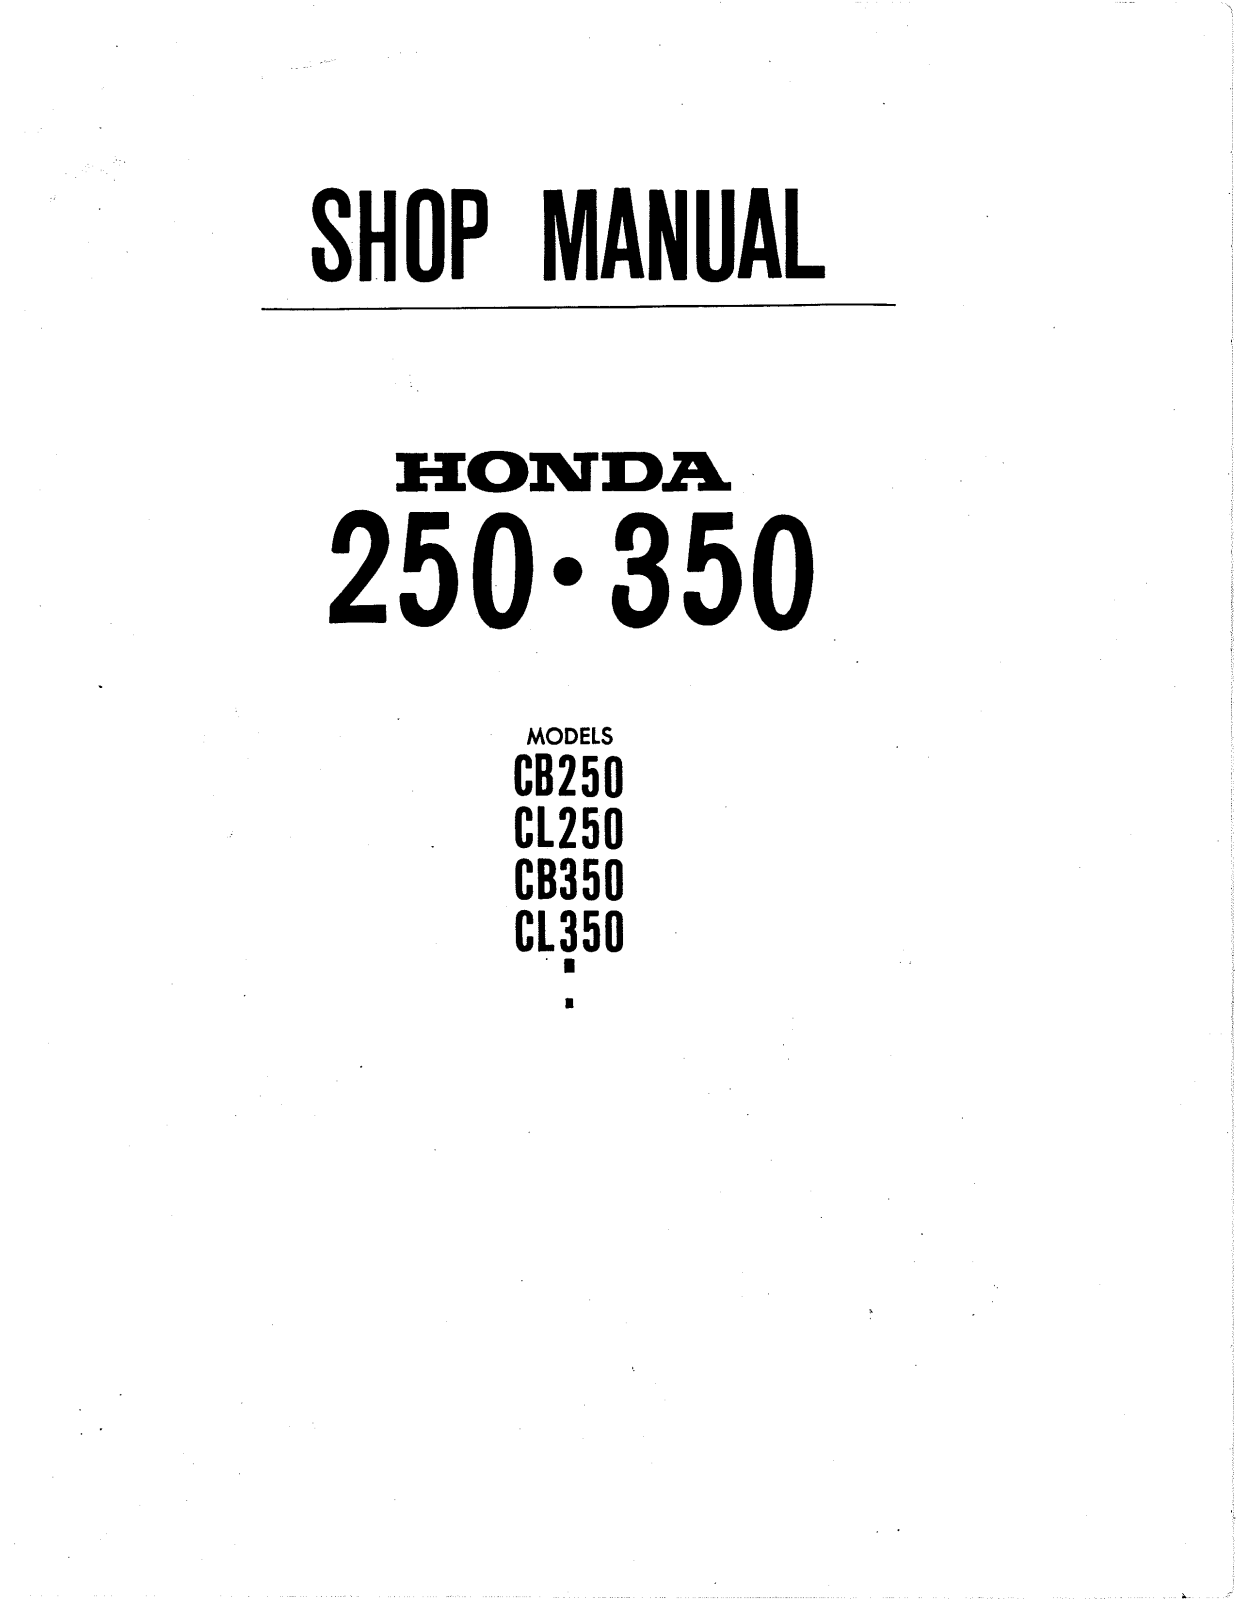 Honda CB250, CL250 User Manual